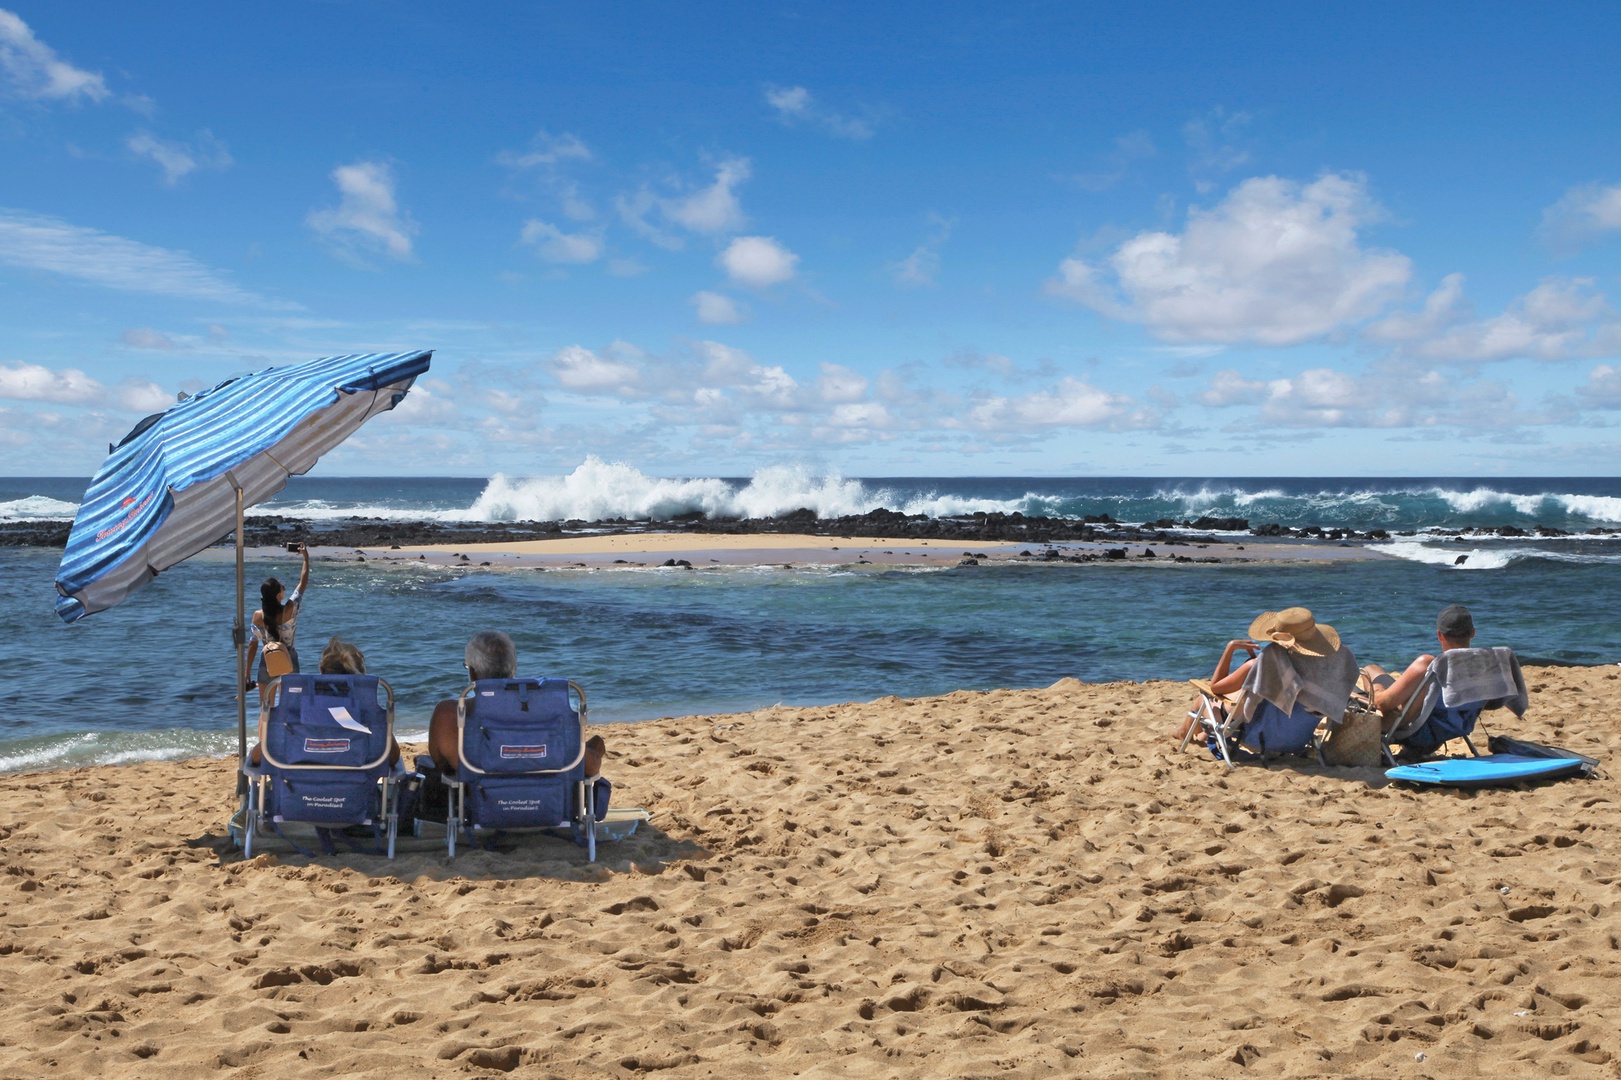 Koloa Vacation Rentals, Waikomo Streams 203 - Romantic bliss at Poipu Beach: an idyllic setting